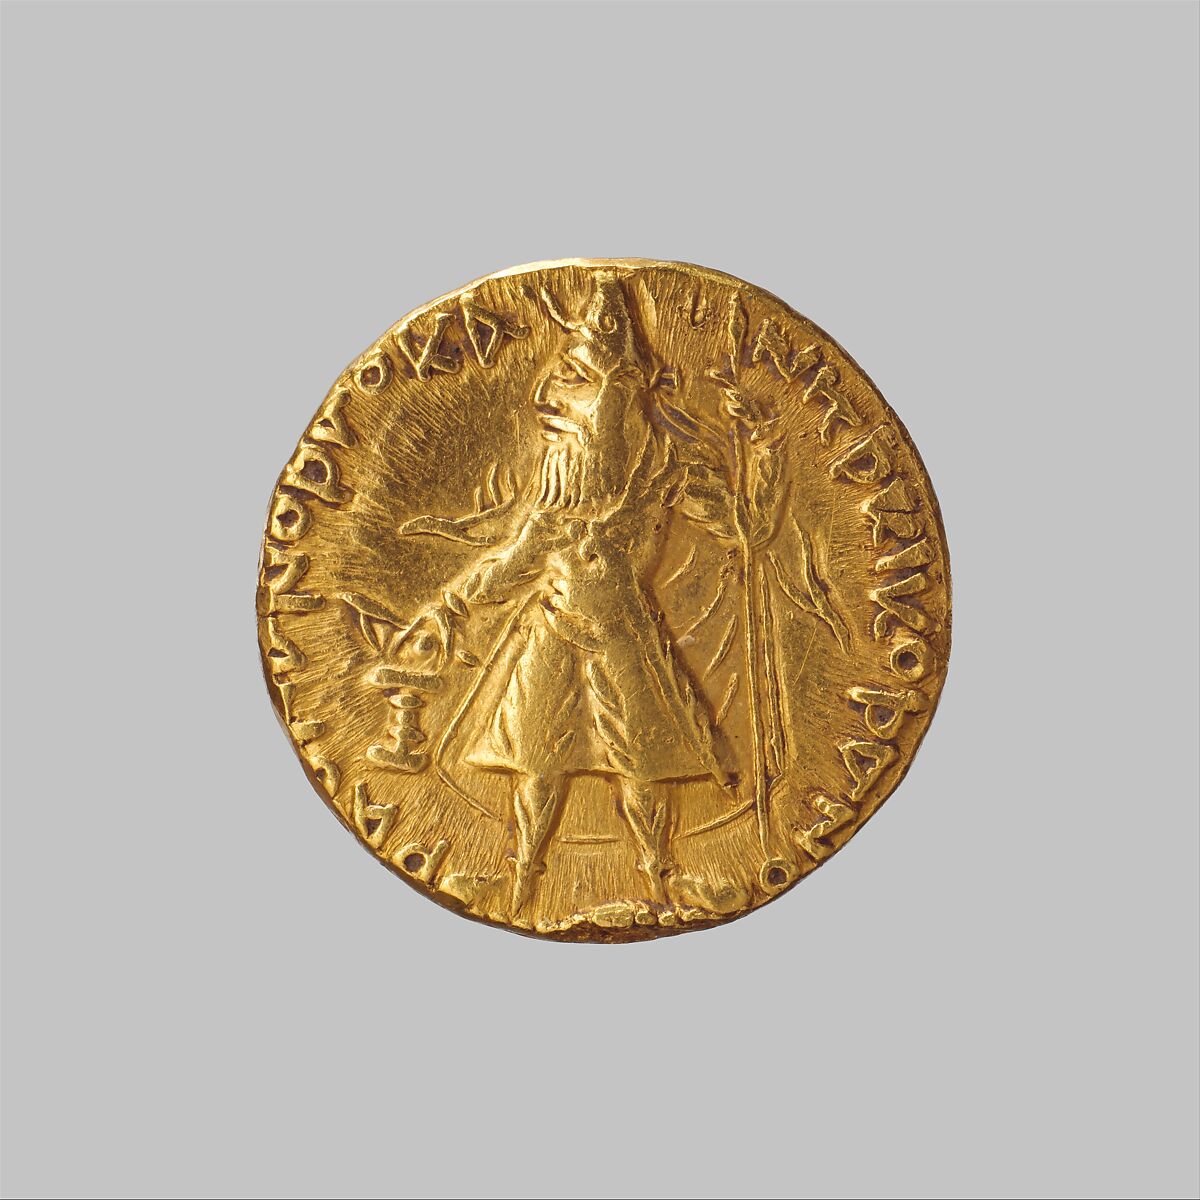 Coin of Kanishka, Gold, Pakistan (ancient region of Gandhara) 